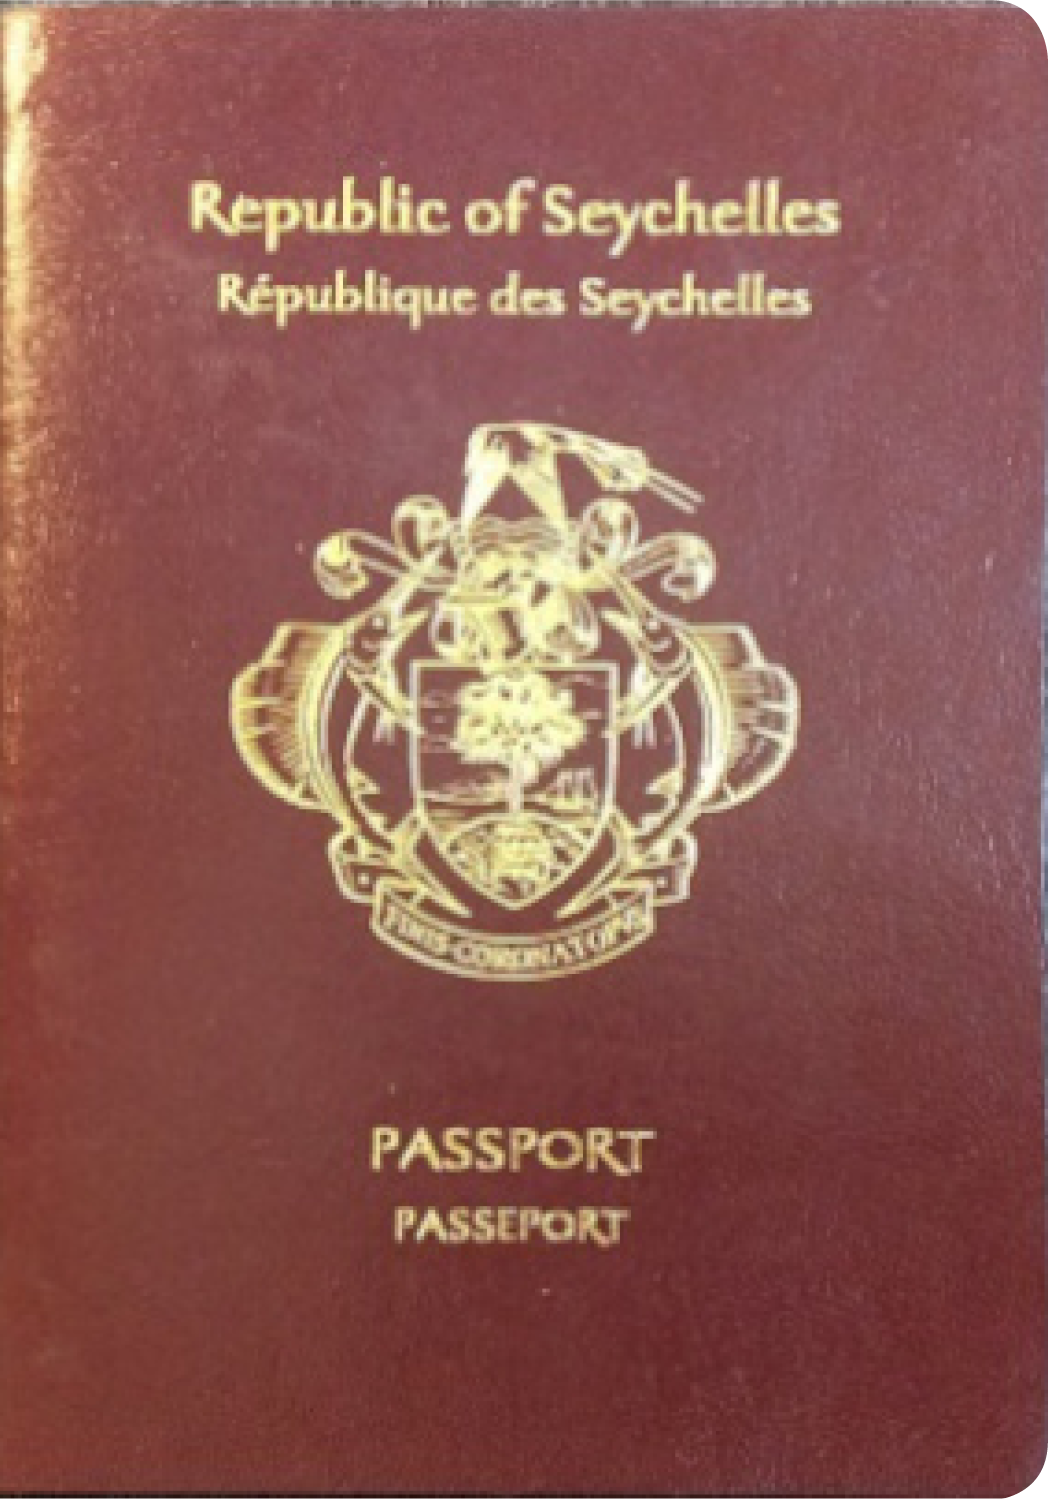 A regular or ordinary Seychelles passport - Front side